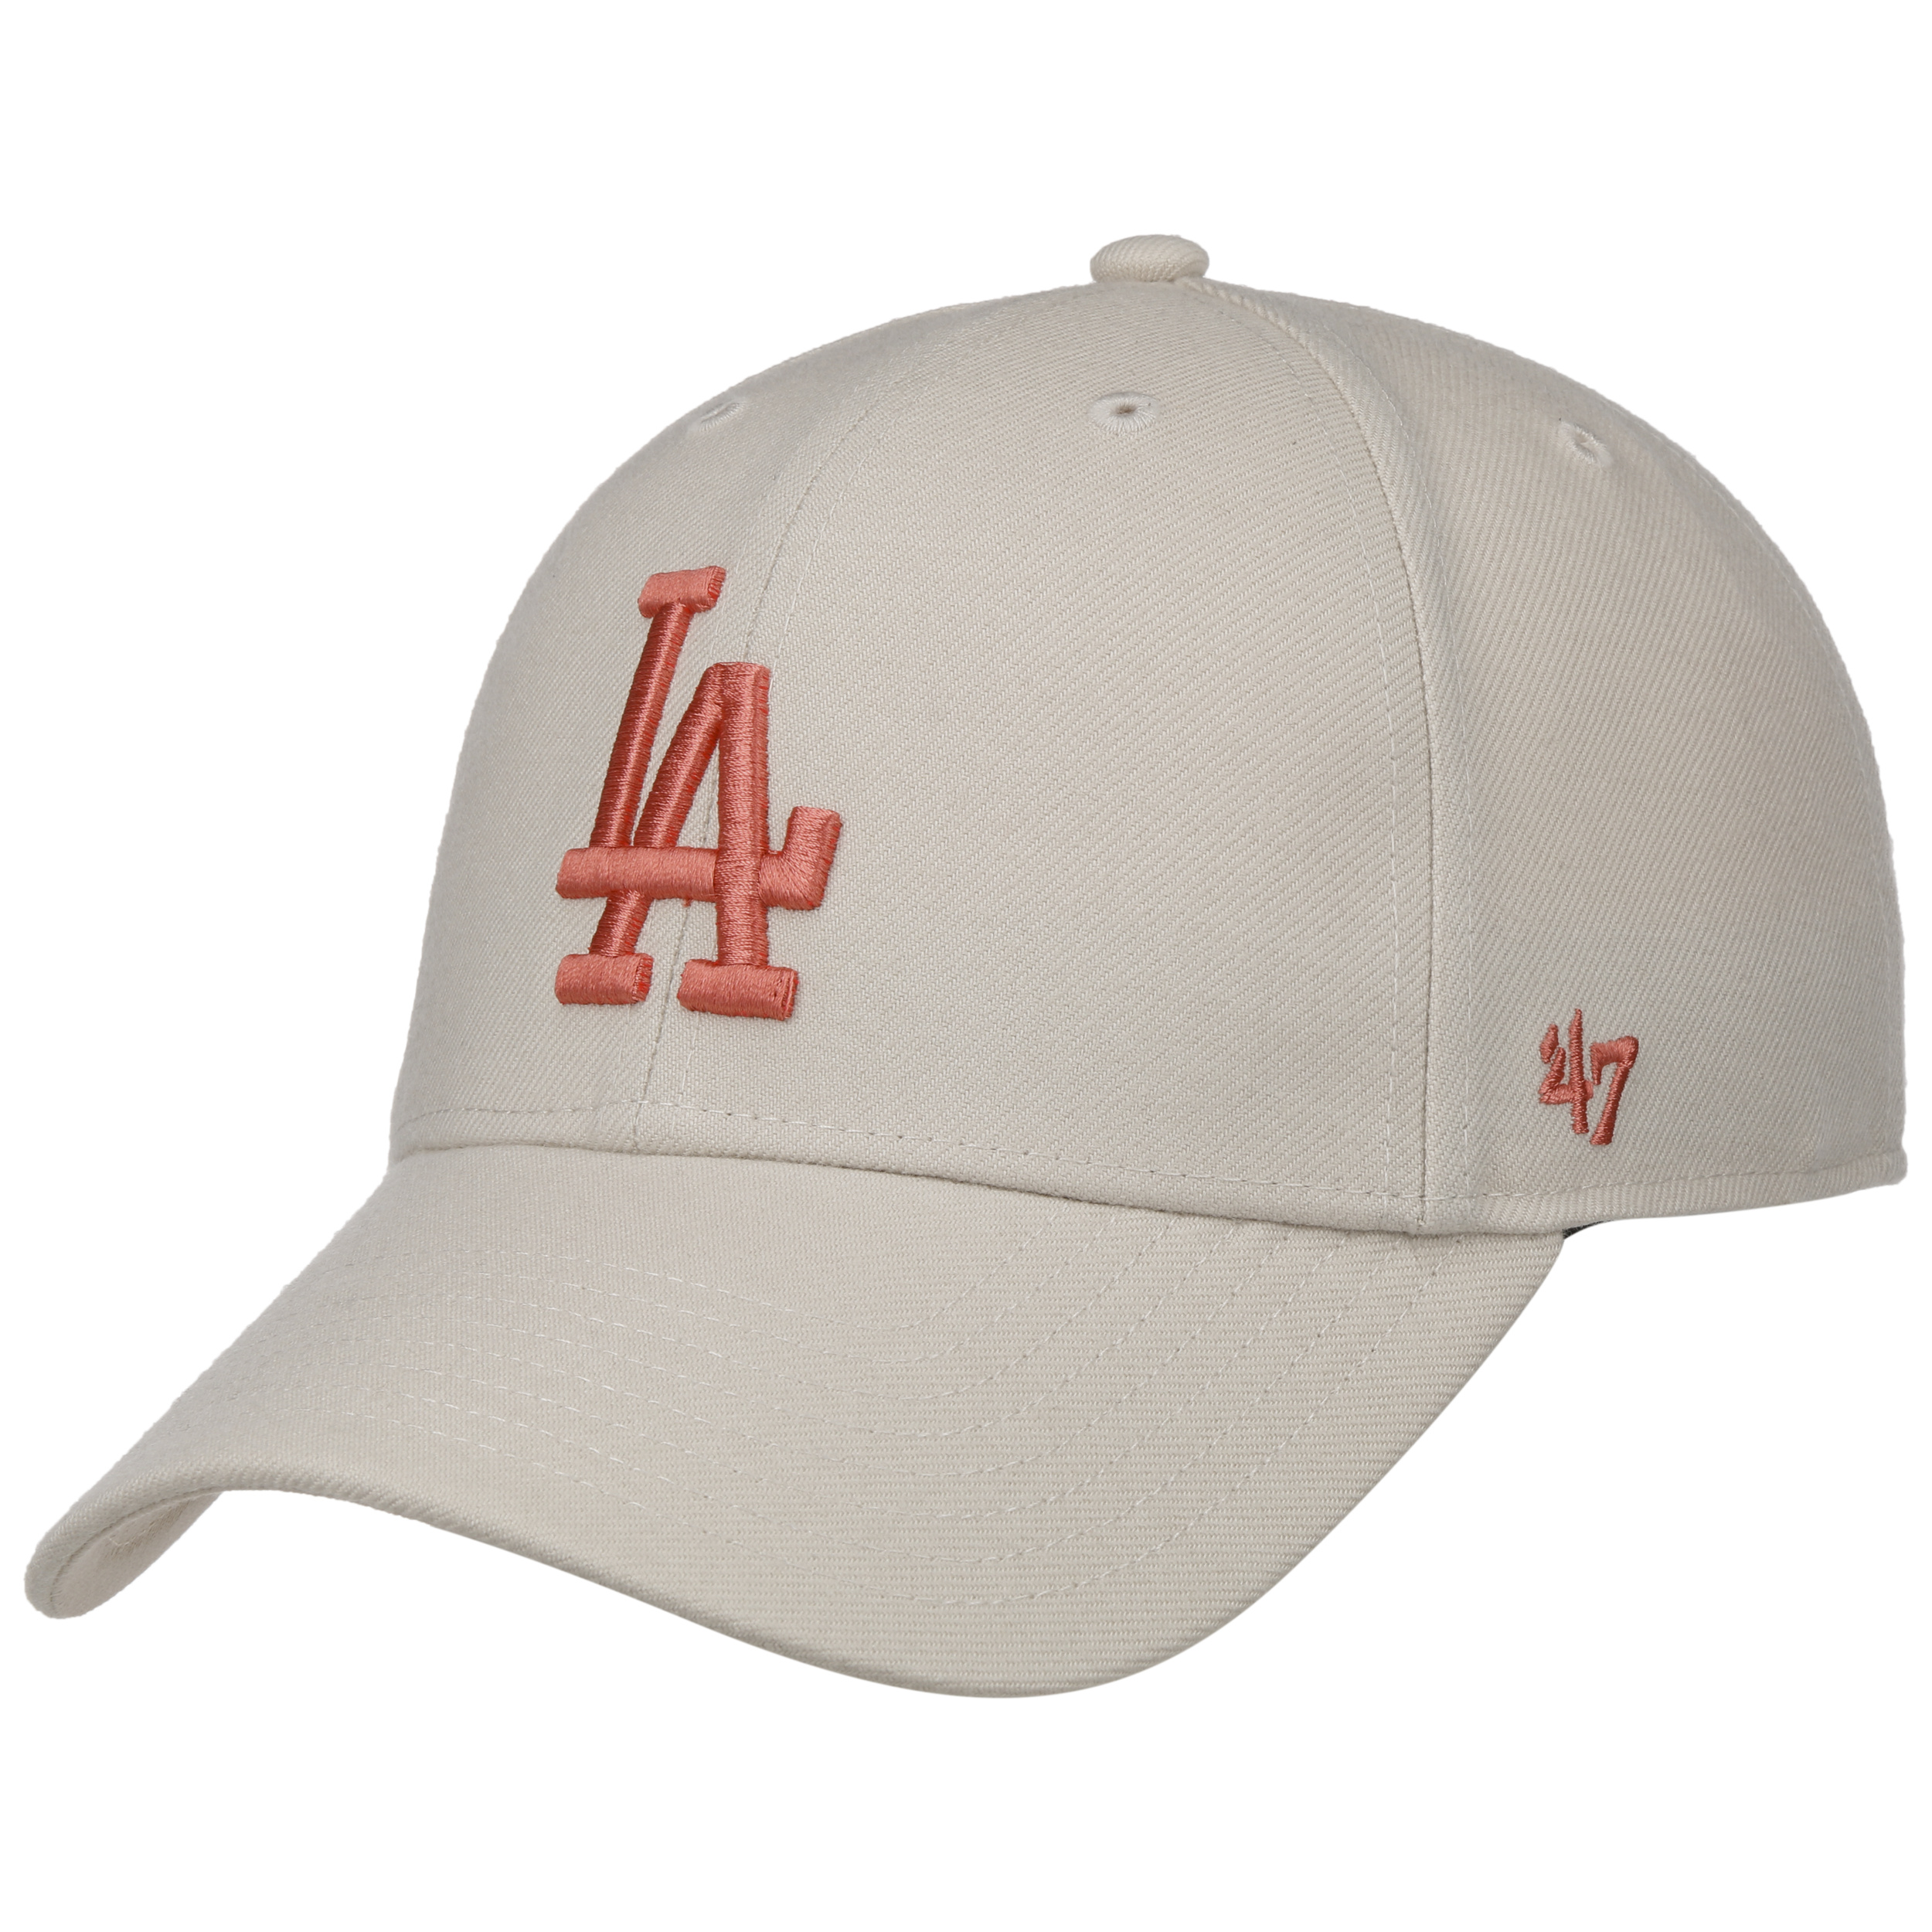 MLB Dodgers MVP Snapback Cap by 47 Brand